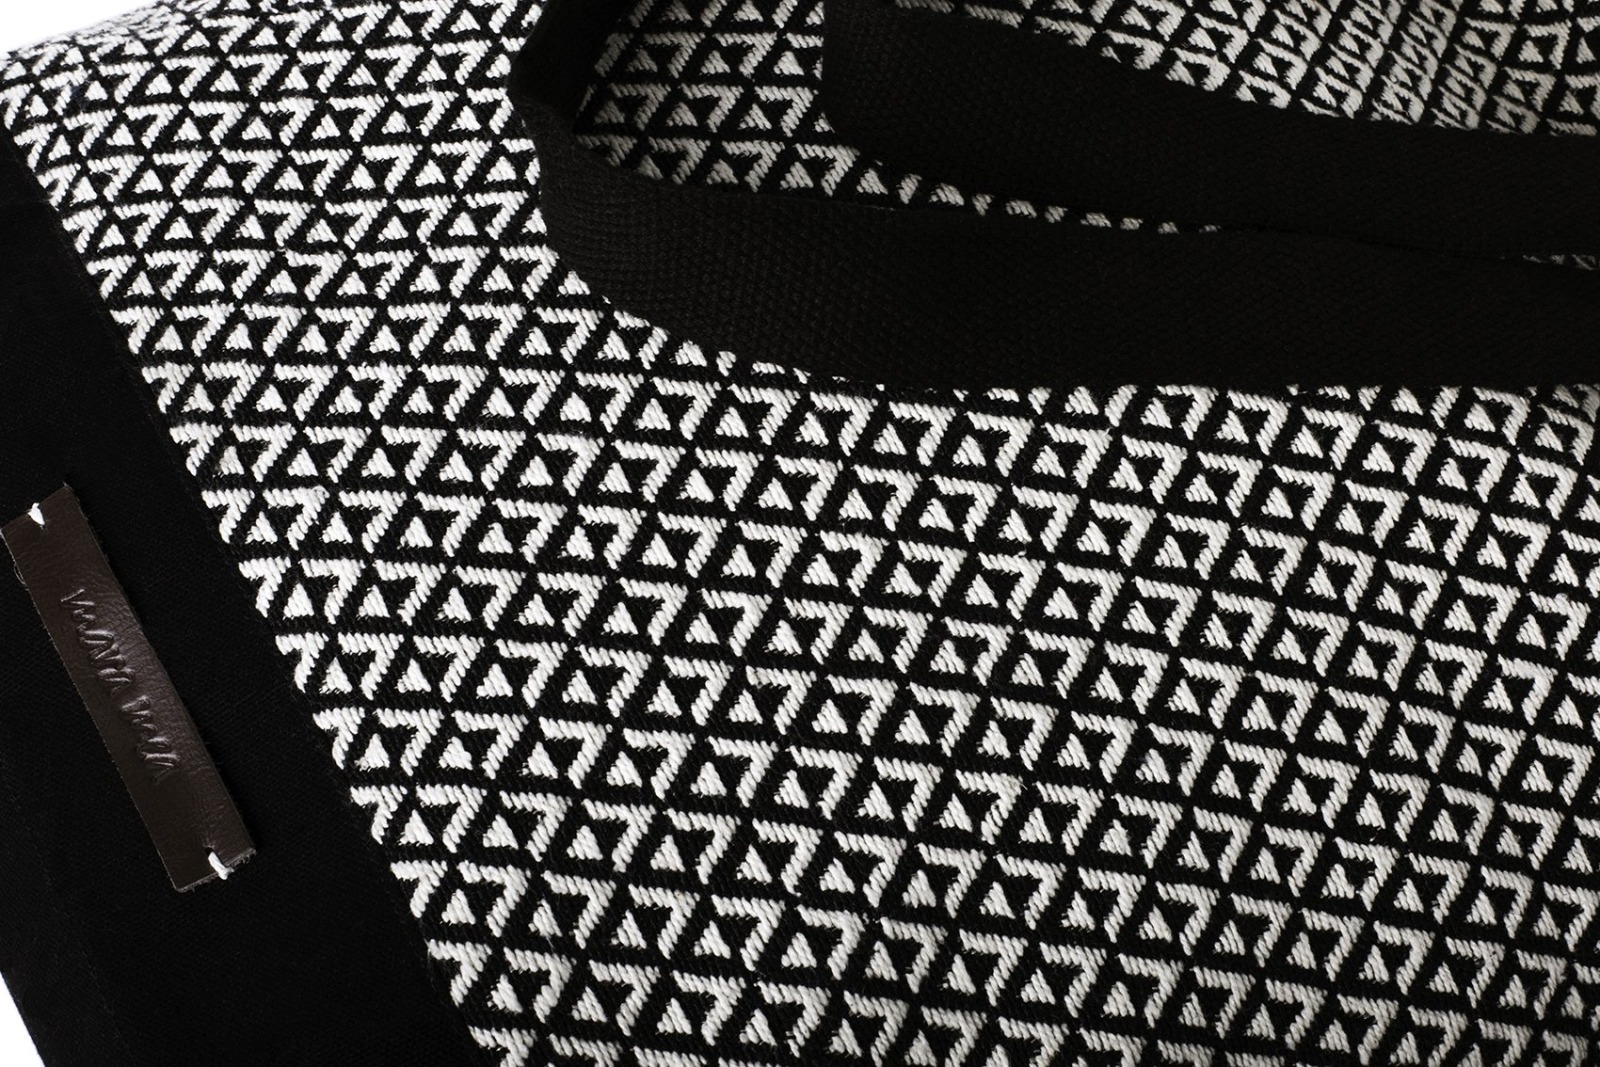 mara mea - diaper bag road trip - black/off white pattern 4